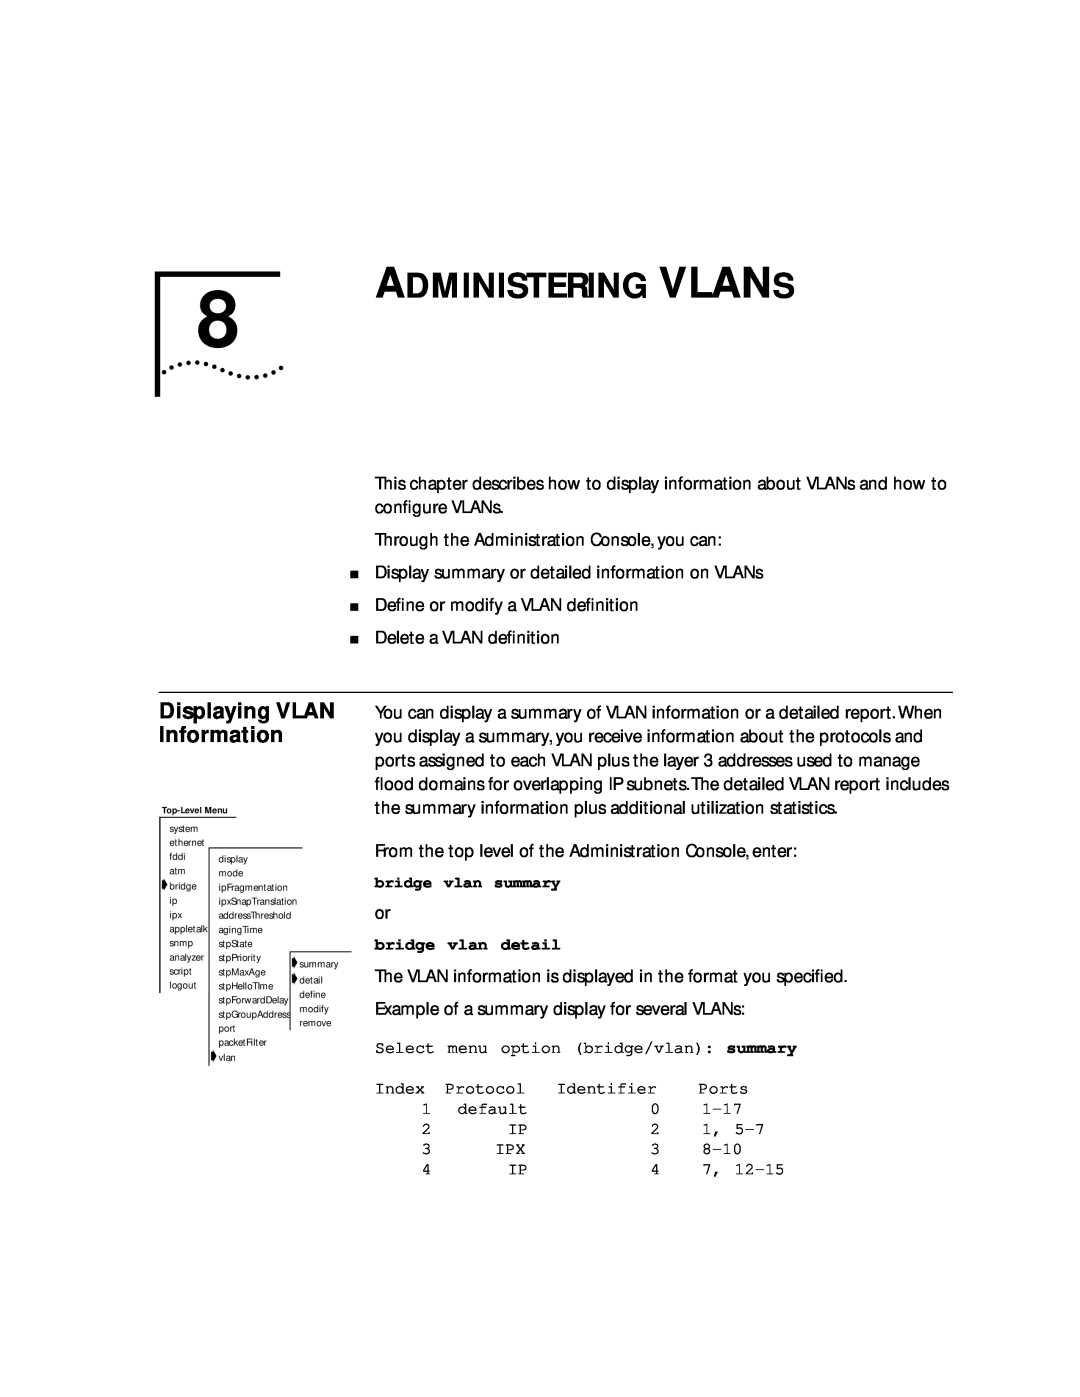 3Com 2500 manual Administering Vlans, Displaying VLAN Information 